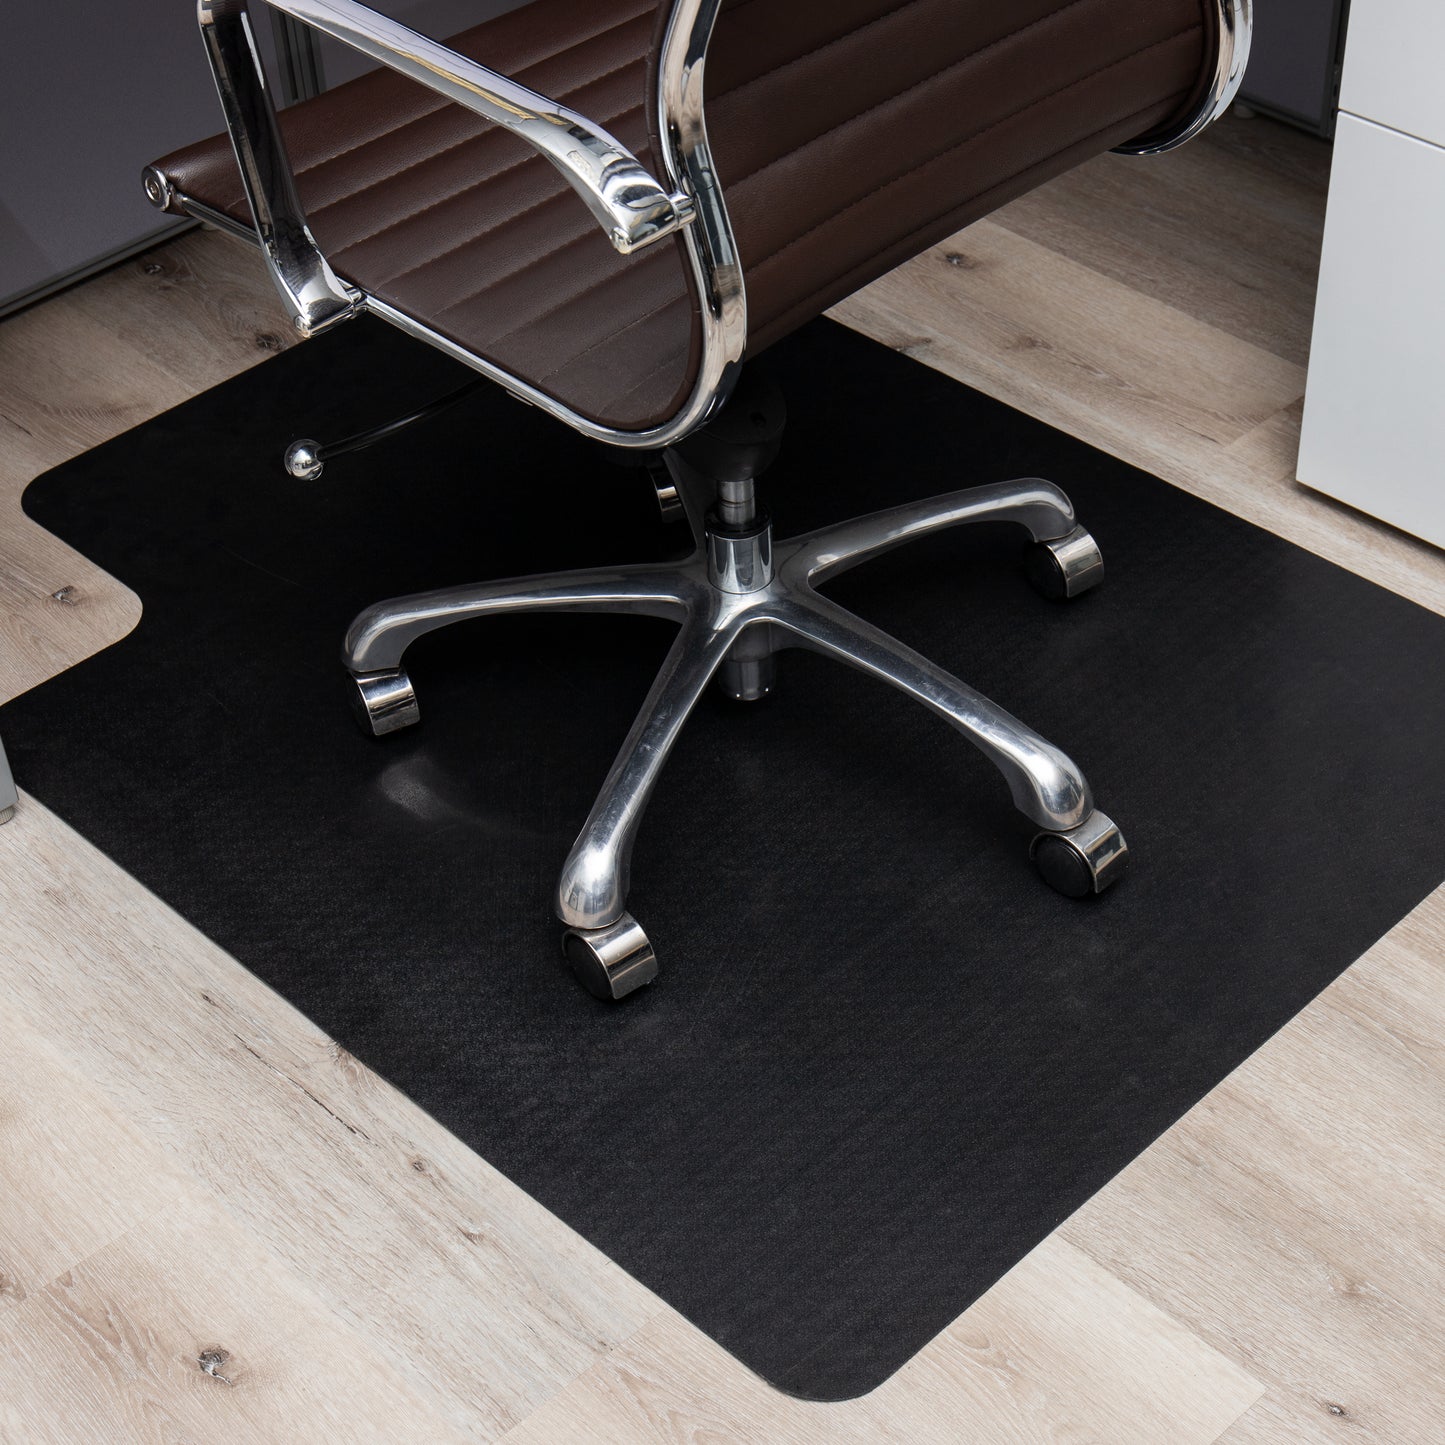 Mind Reader Office Chair Mat for Hardwood Floors, Under Desk Floor Protector, Rolling, PVC, 47.5"L x 35.5"W x 0.1"H, Black